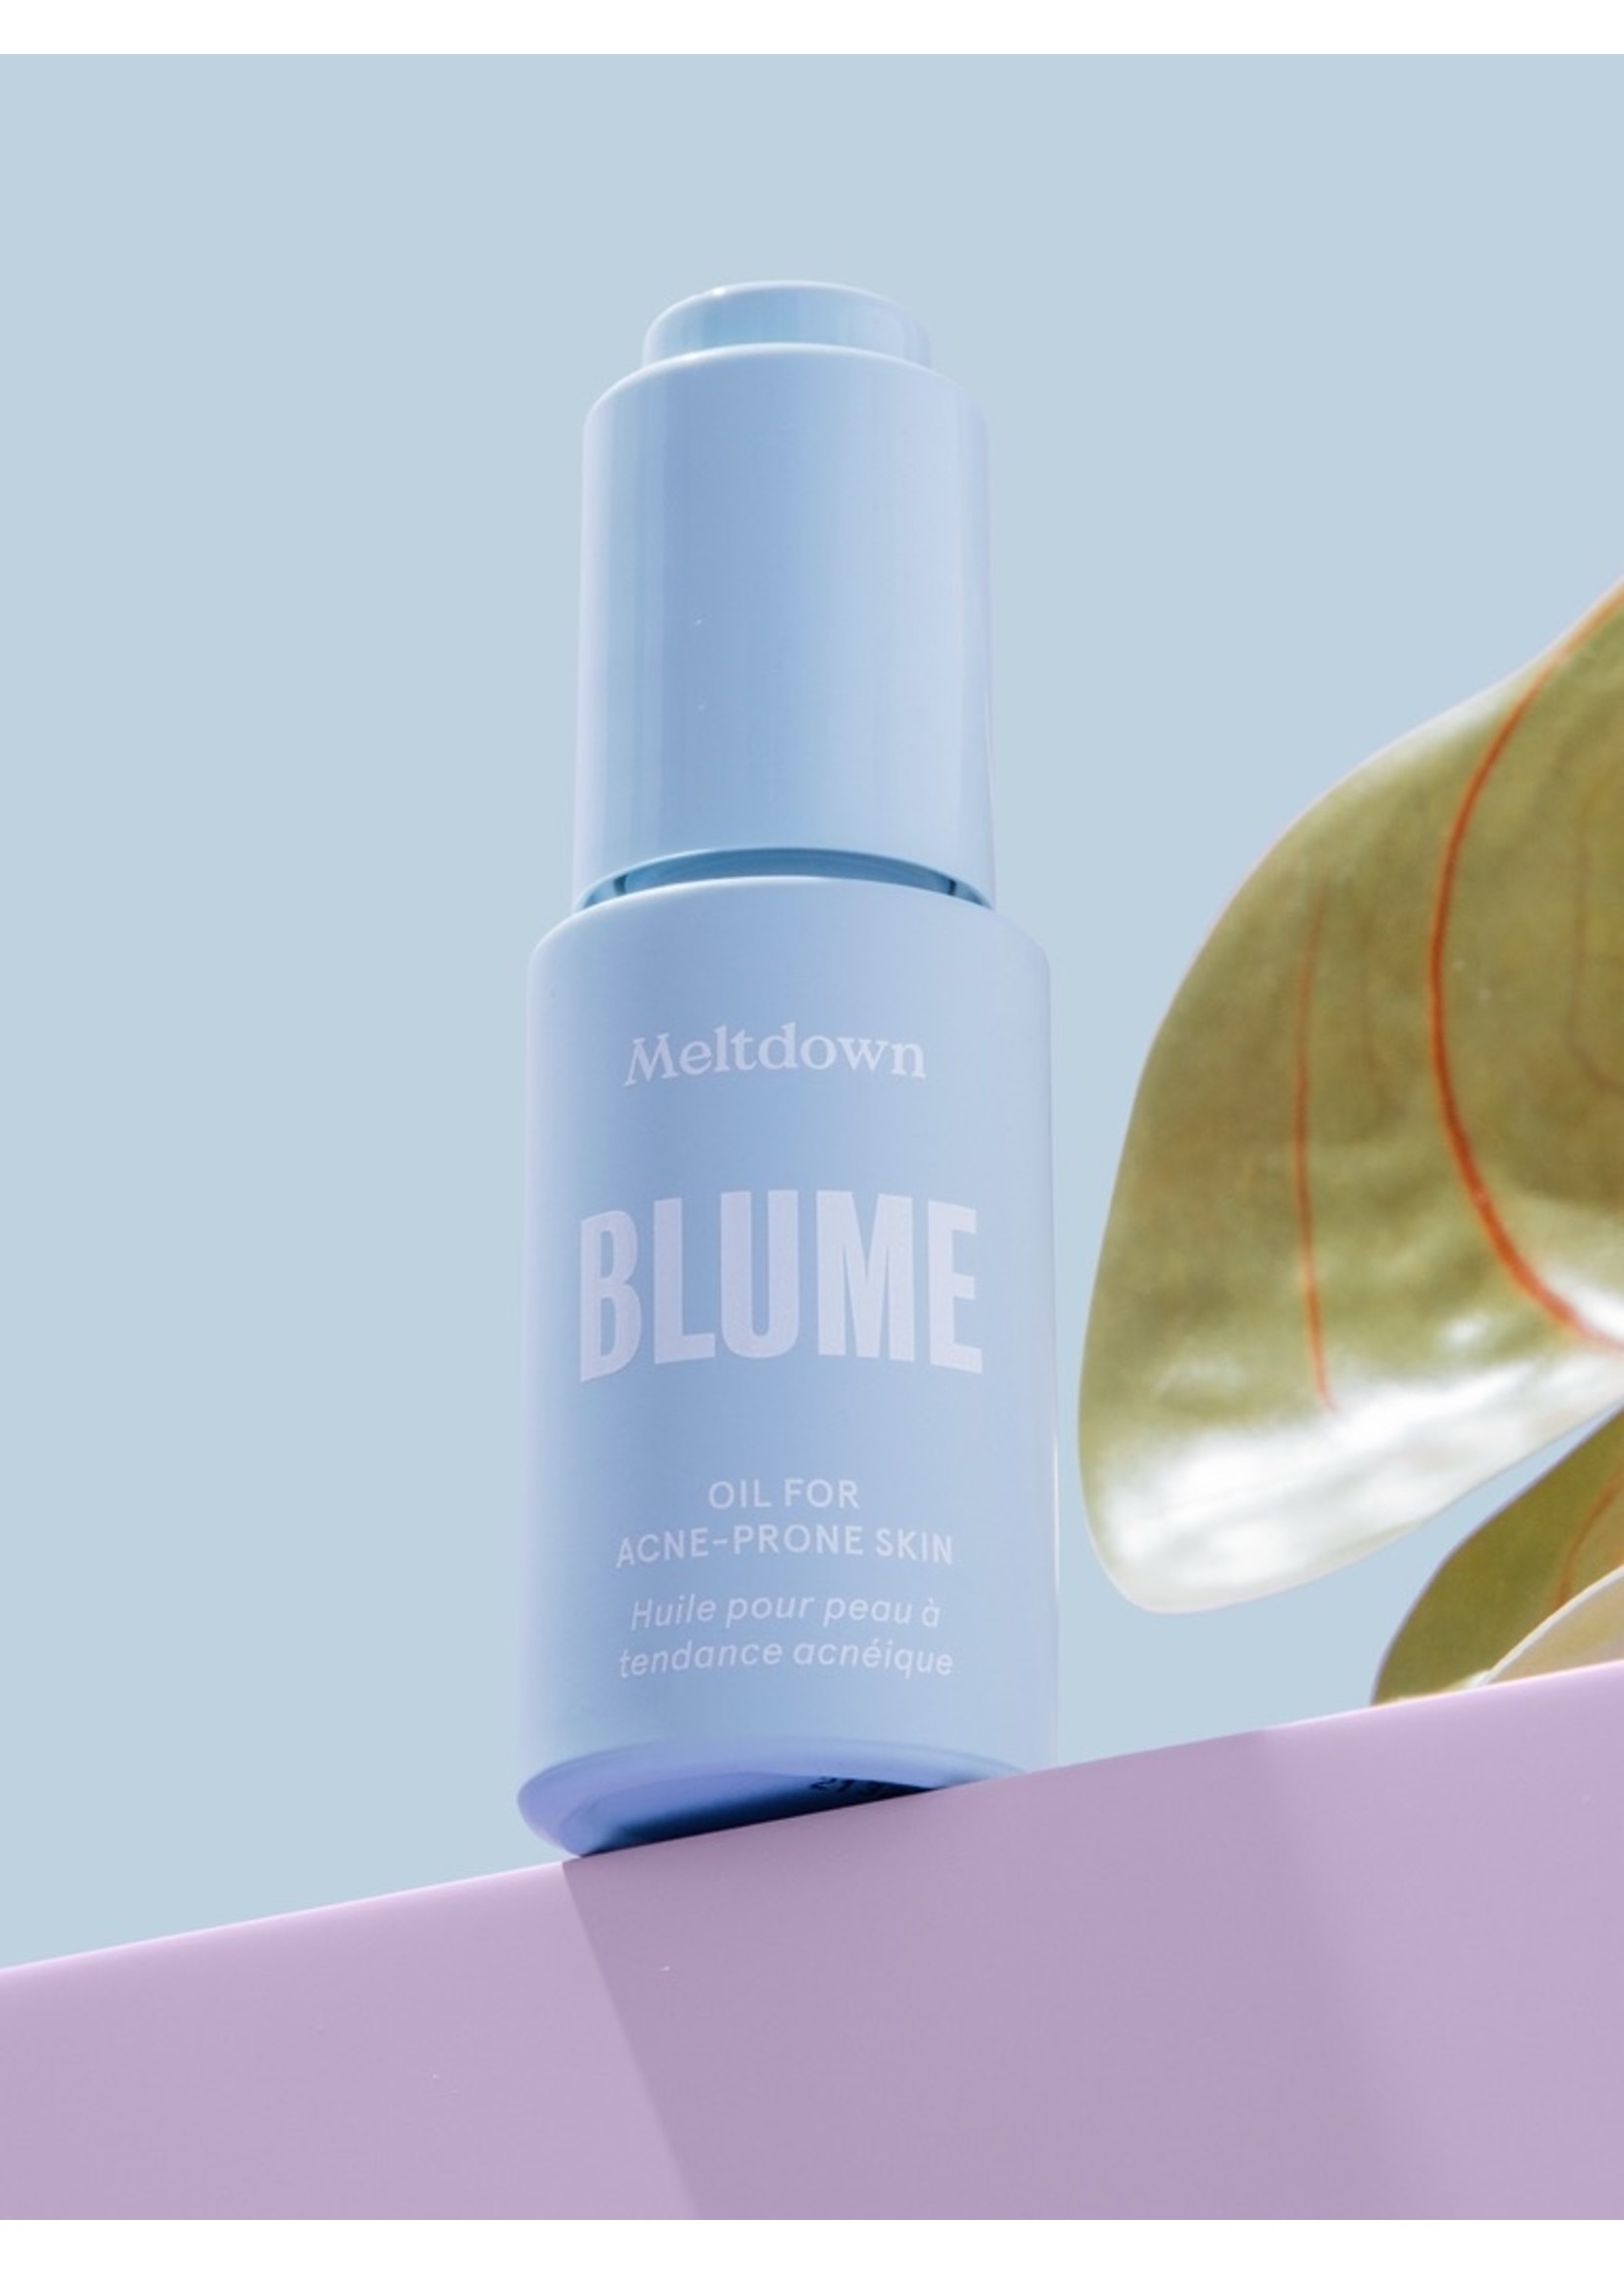 Blume Skincare "Meltdown" Acne Oil by Blume Skincare